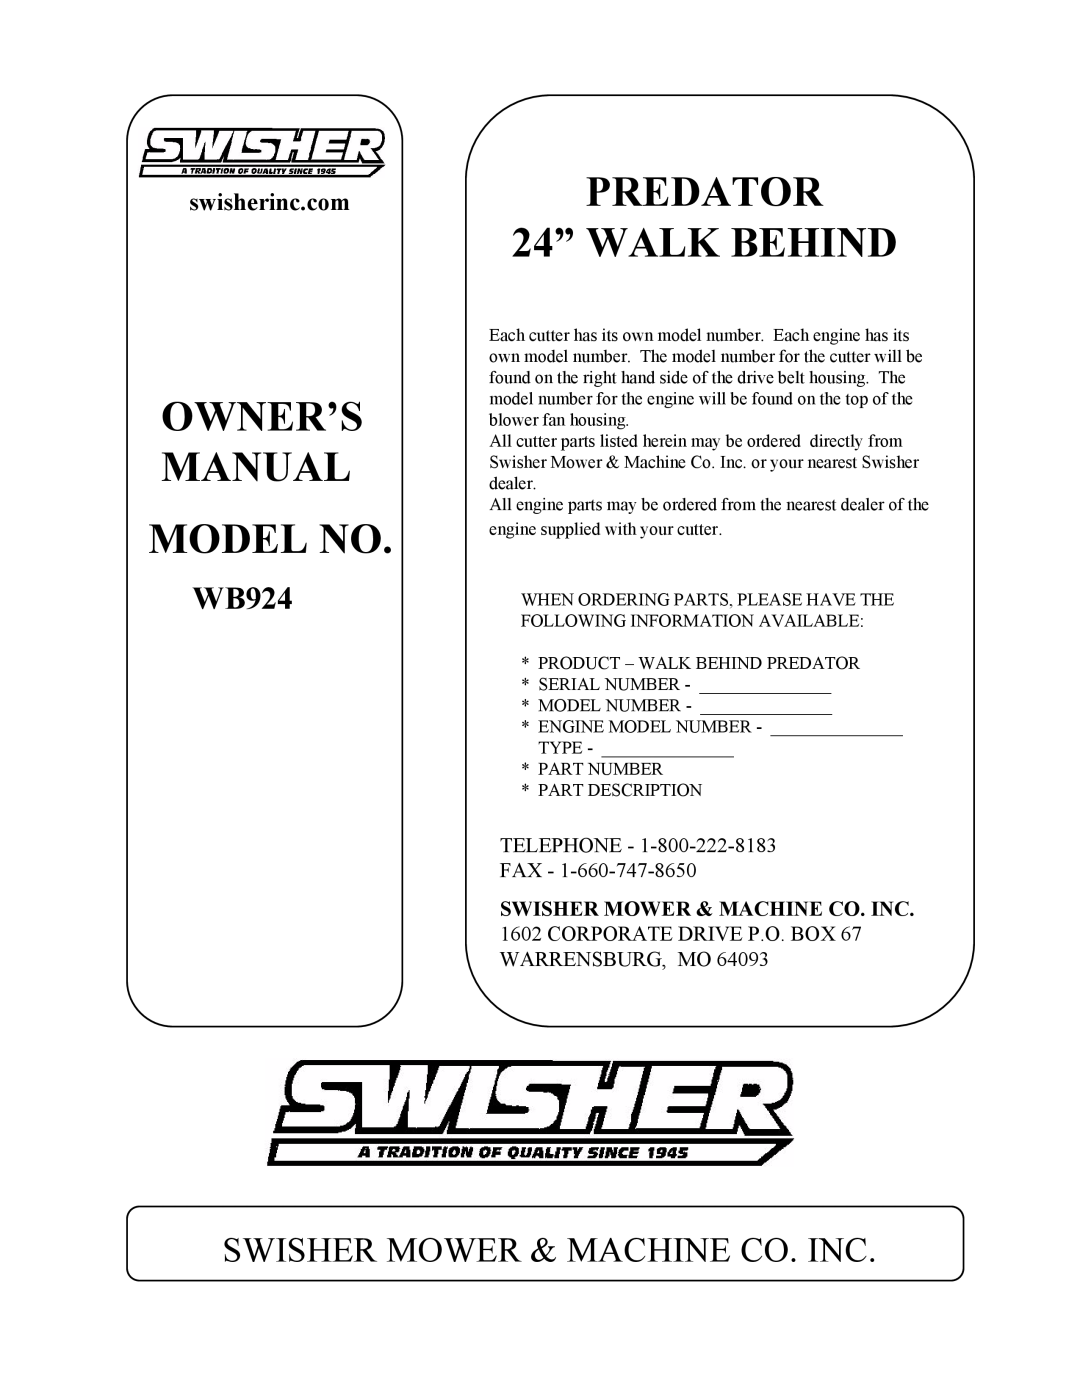 Swisher WB924 owner manual PREDATOR 24” WALK BEHIND, Swisher Mower & Machine Co. Inc, swisherinc.com 